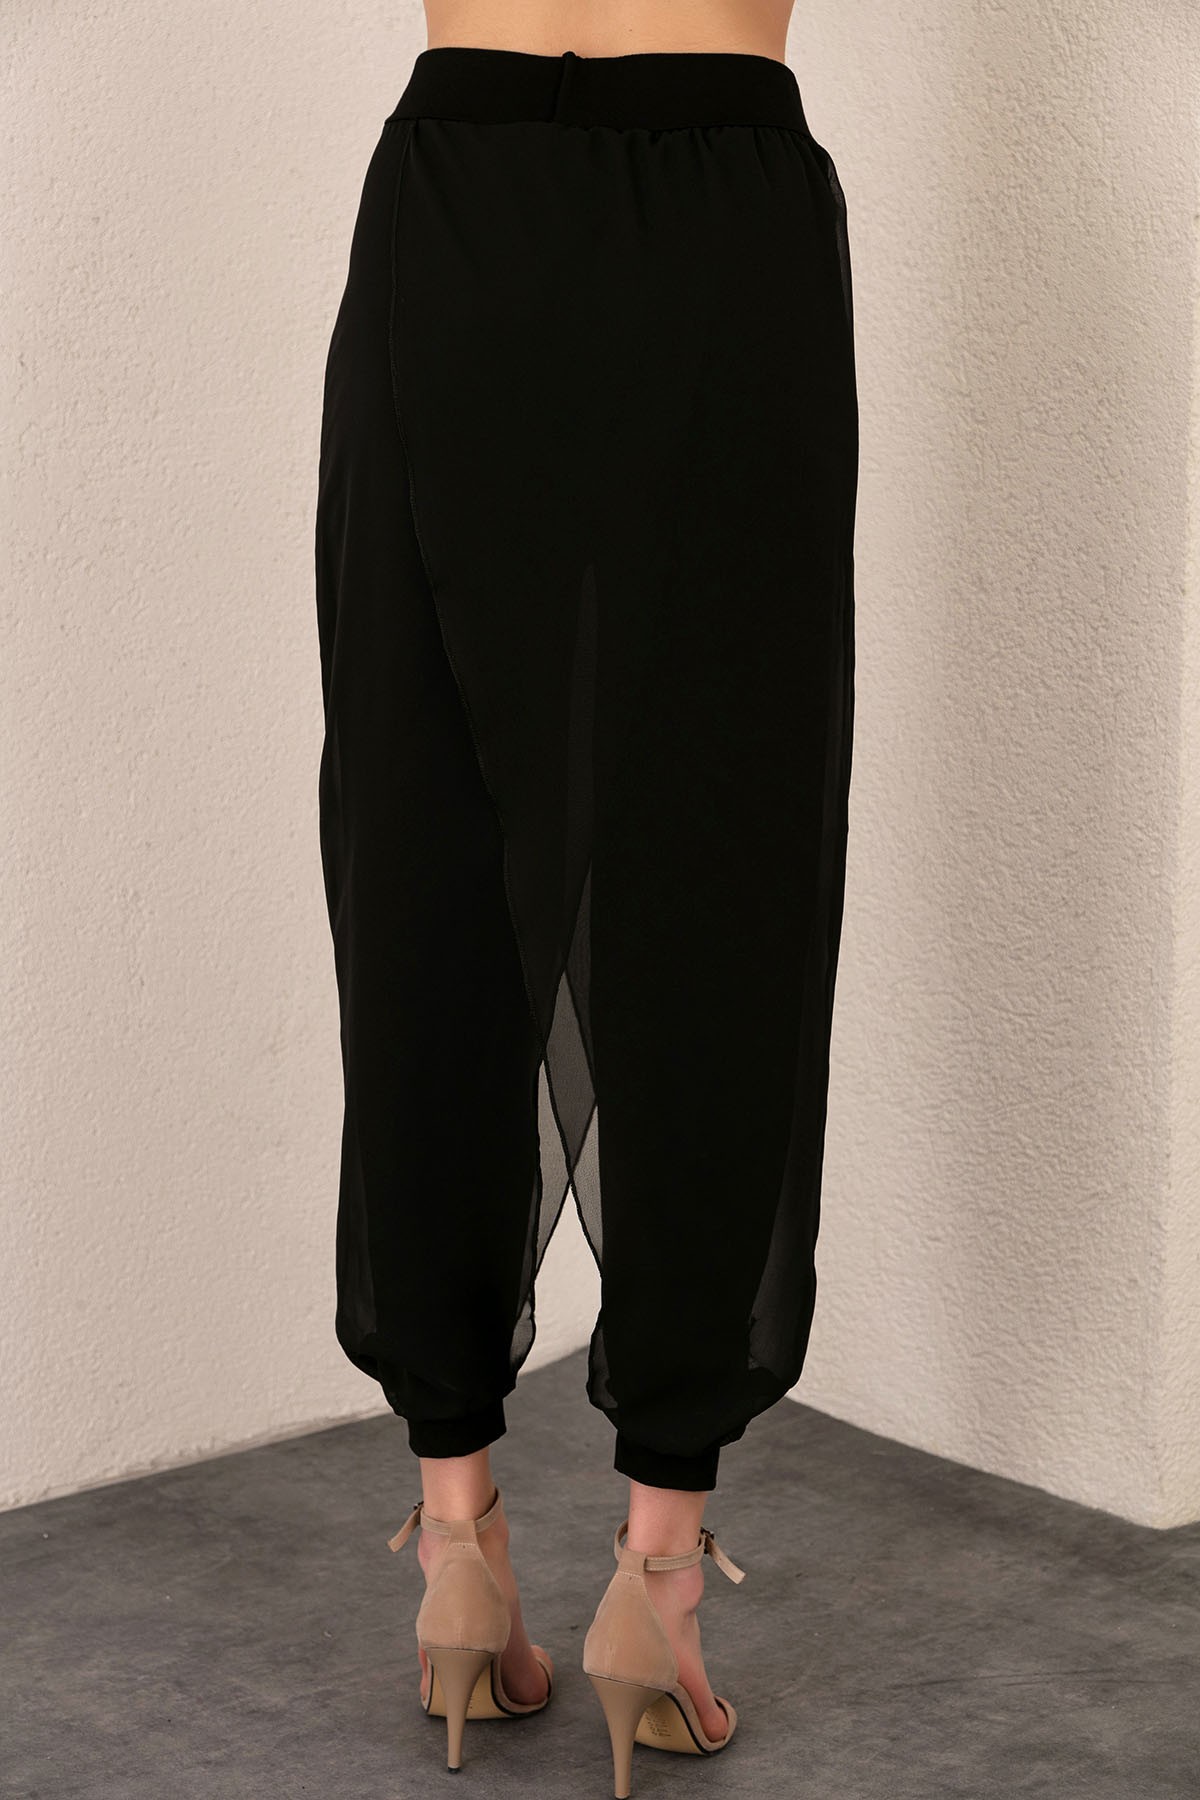 Kadın Siyah Şifon Detaylı Paçası Lastikli Şalvar Pantolon